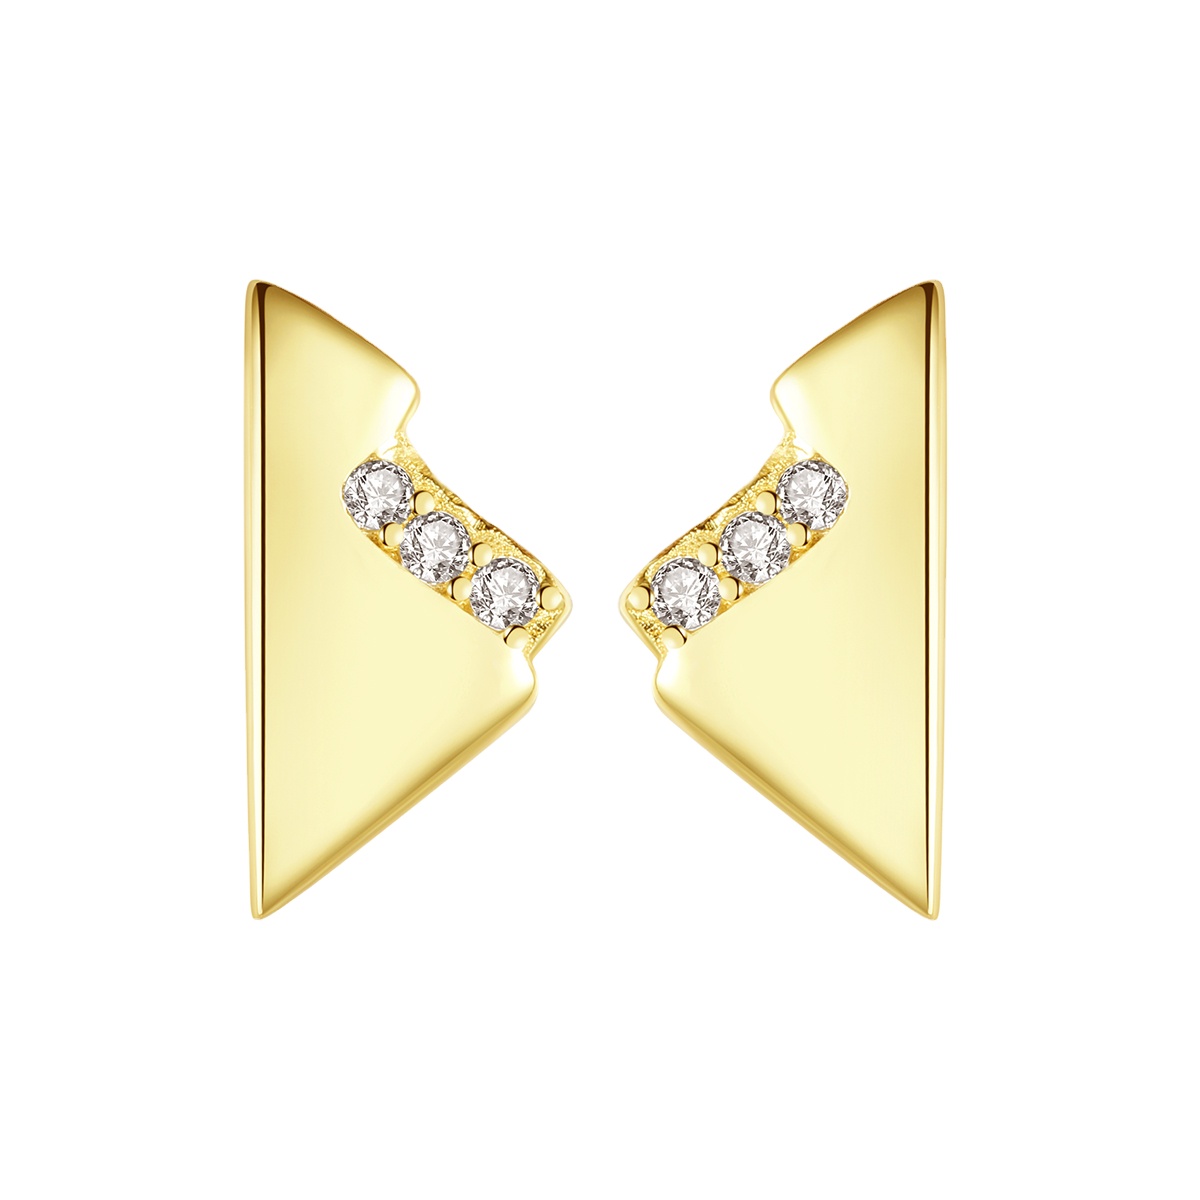 Cz 14K Gold Plated Irregular Geometric Sterling Silver Stud Earrings